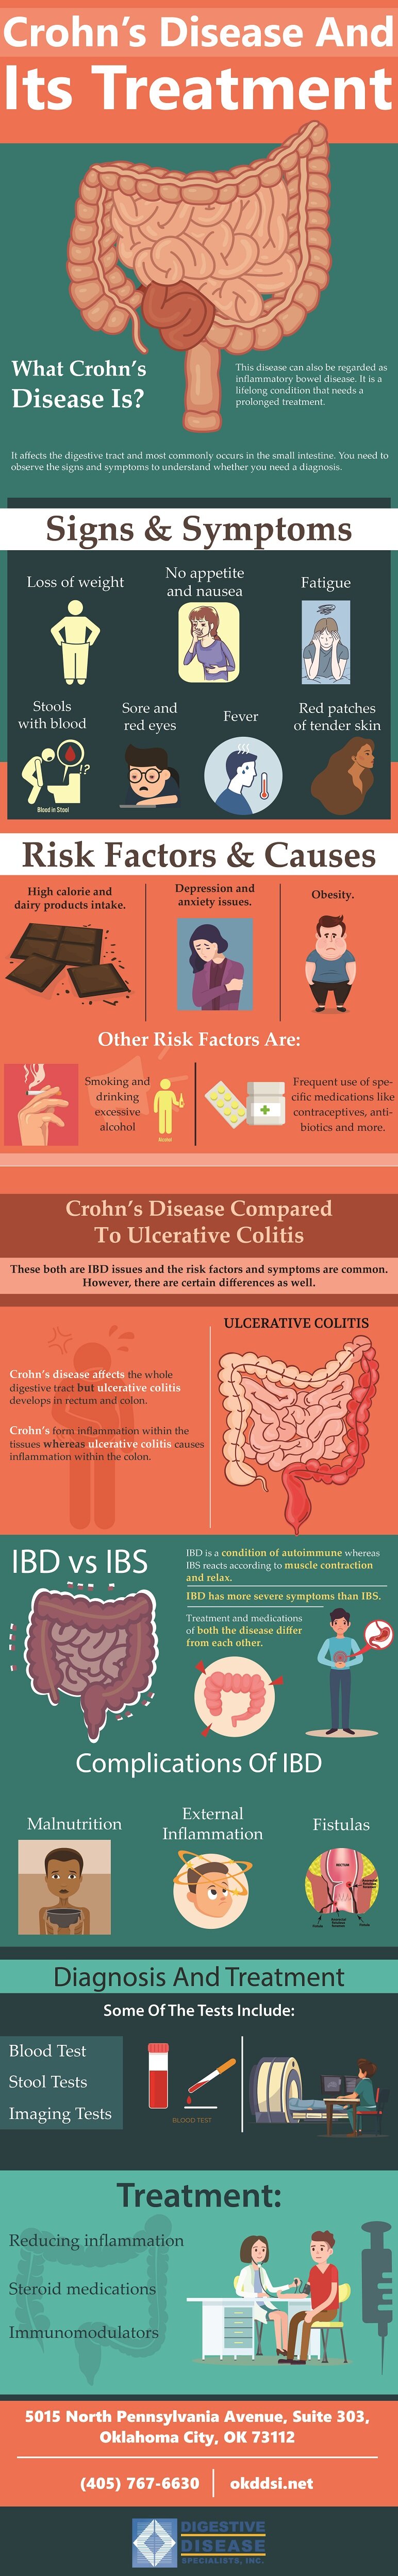 Crohn's Disease and Its Treatment